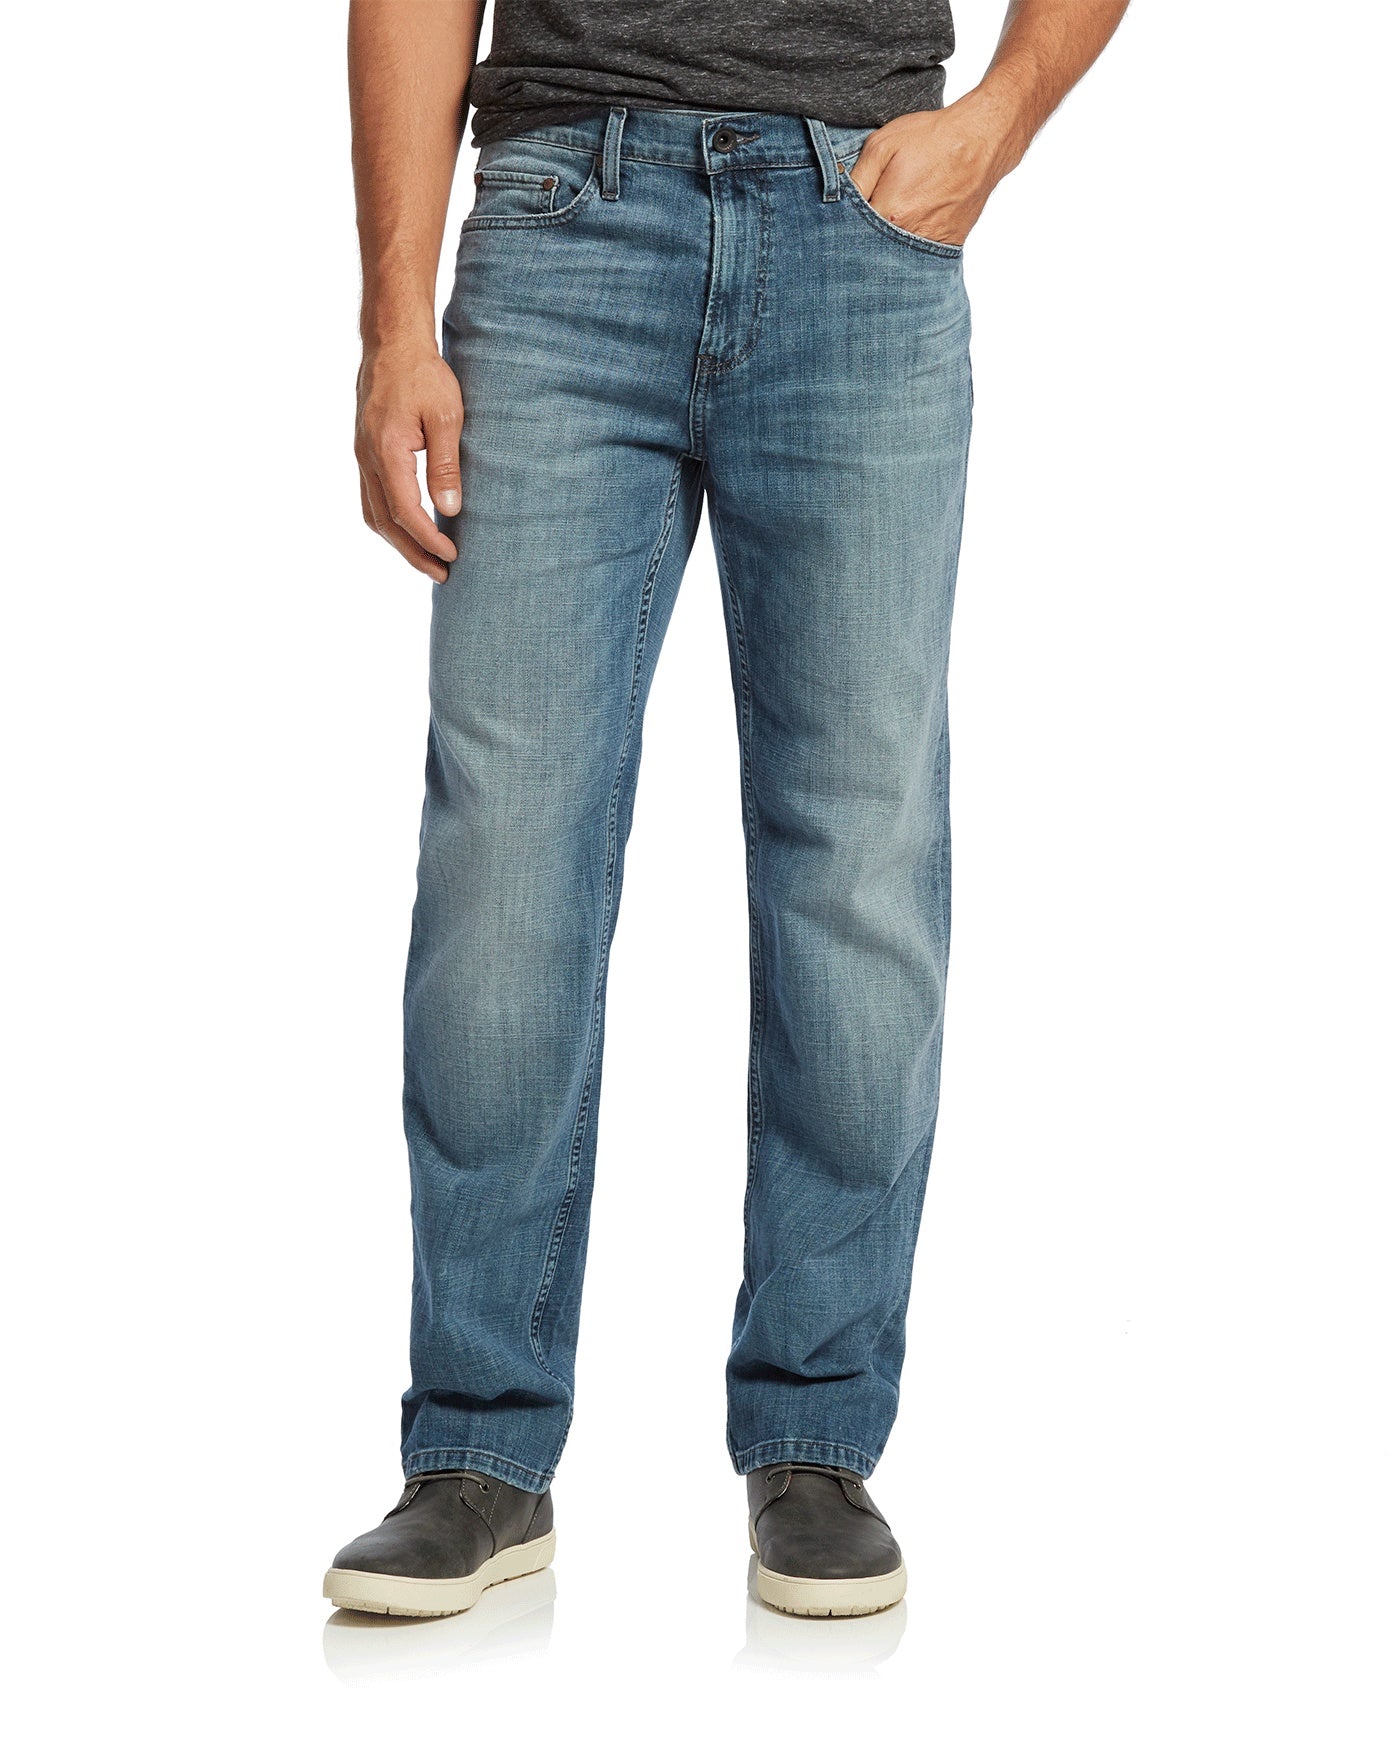 man wearing light wash Adrian jeans in Nashville straight fit